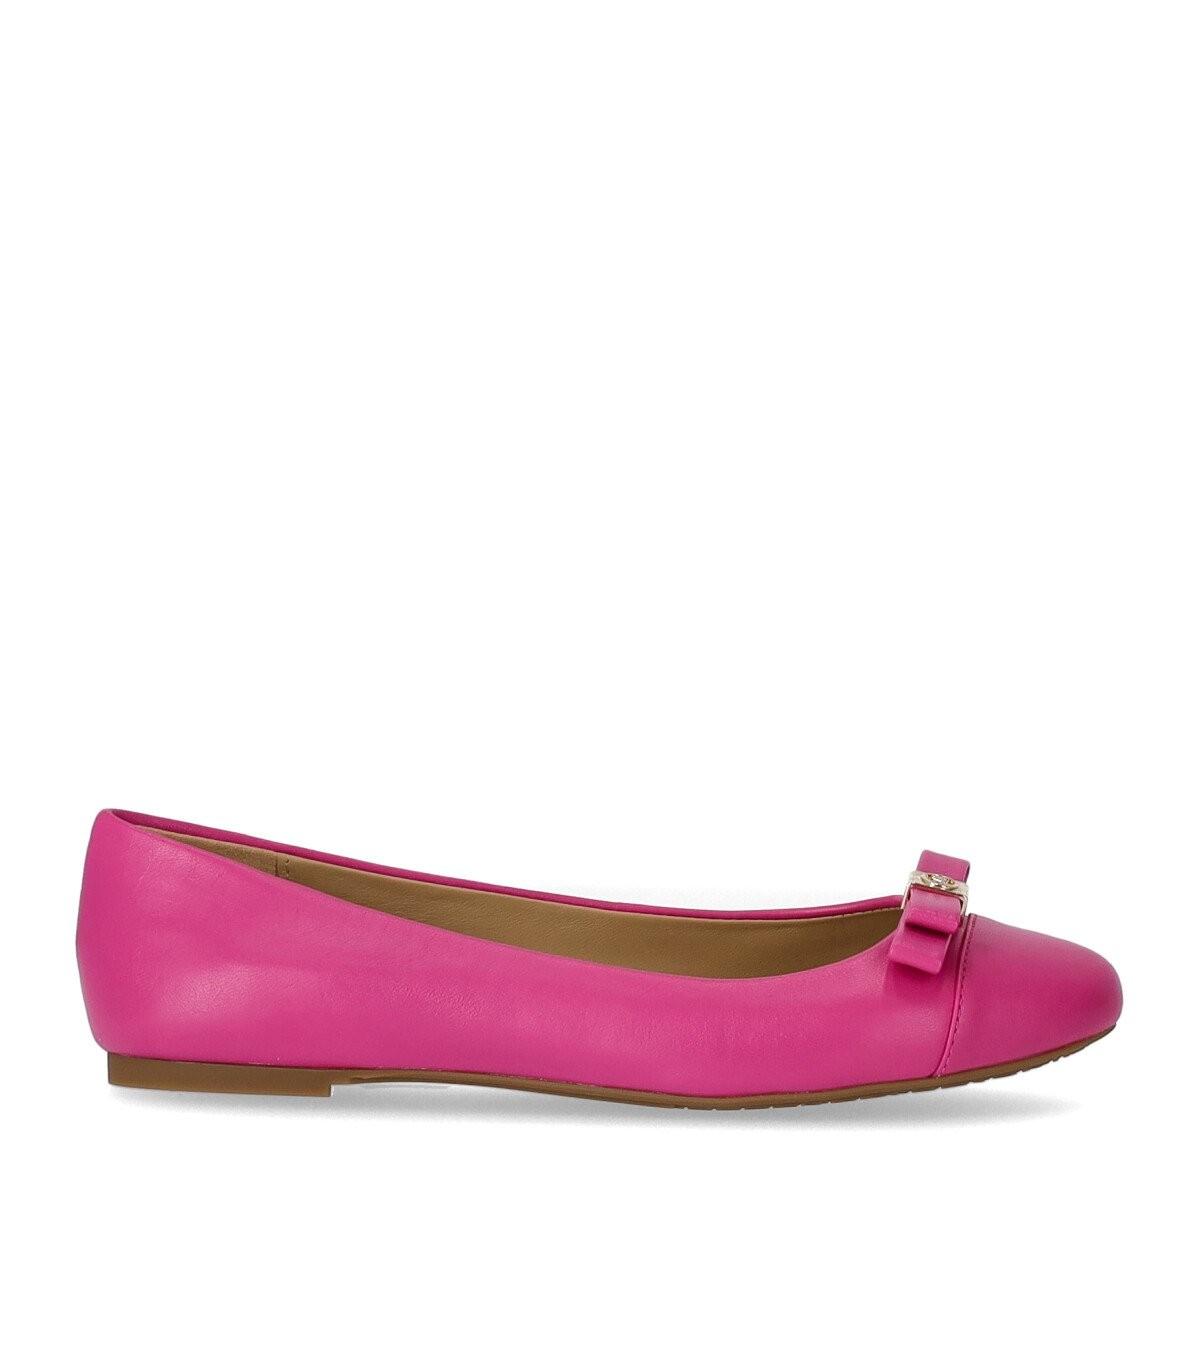 Michael Kors Andrea Fuchsia Ballet Flat Shoe in Pink | Lyst